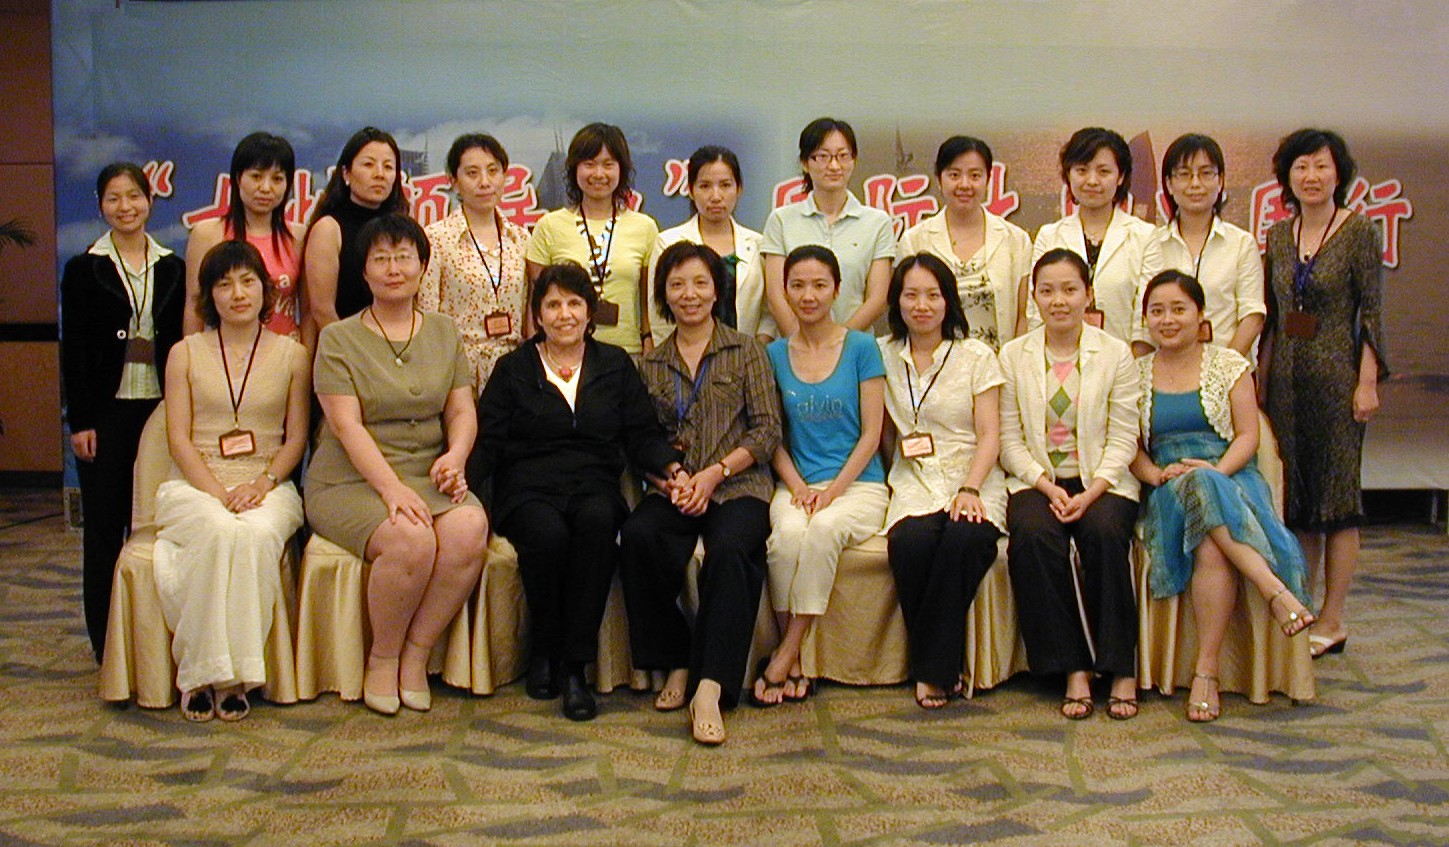 Copy of Participants Women's Leadership Conference Shanghai